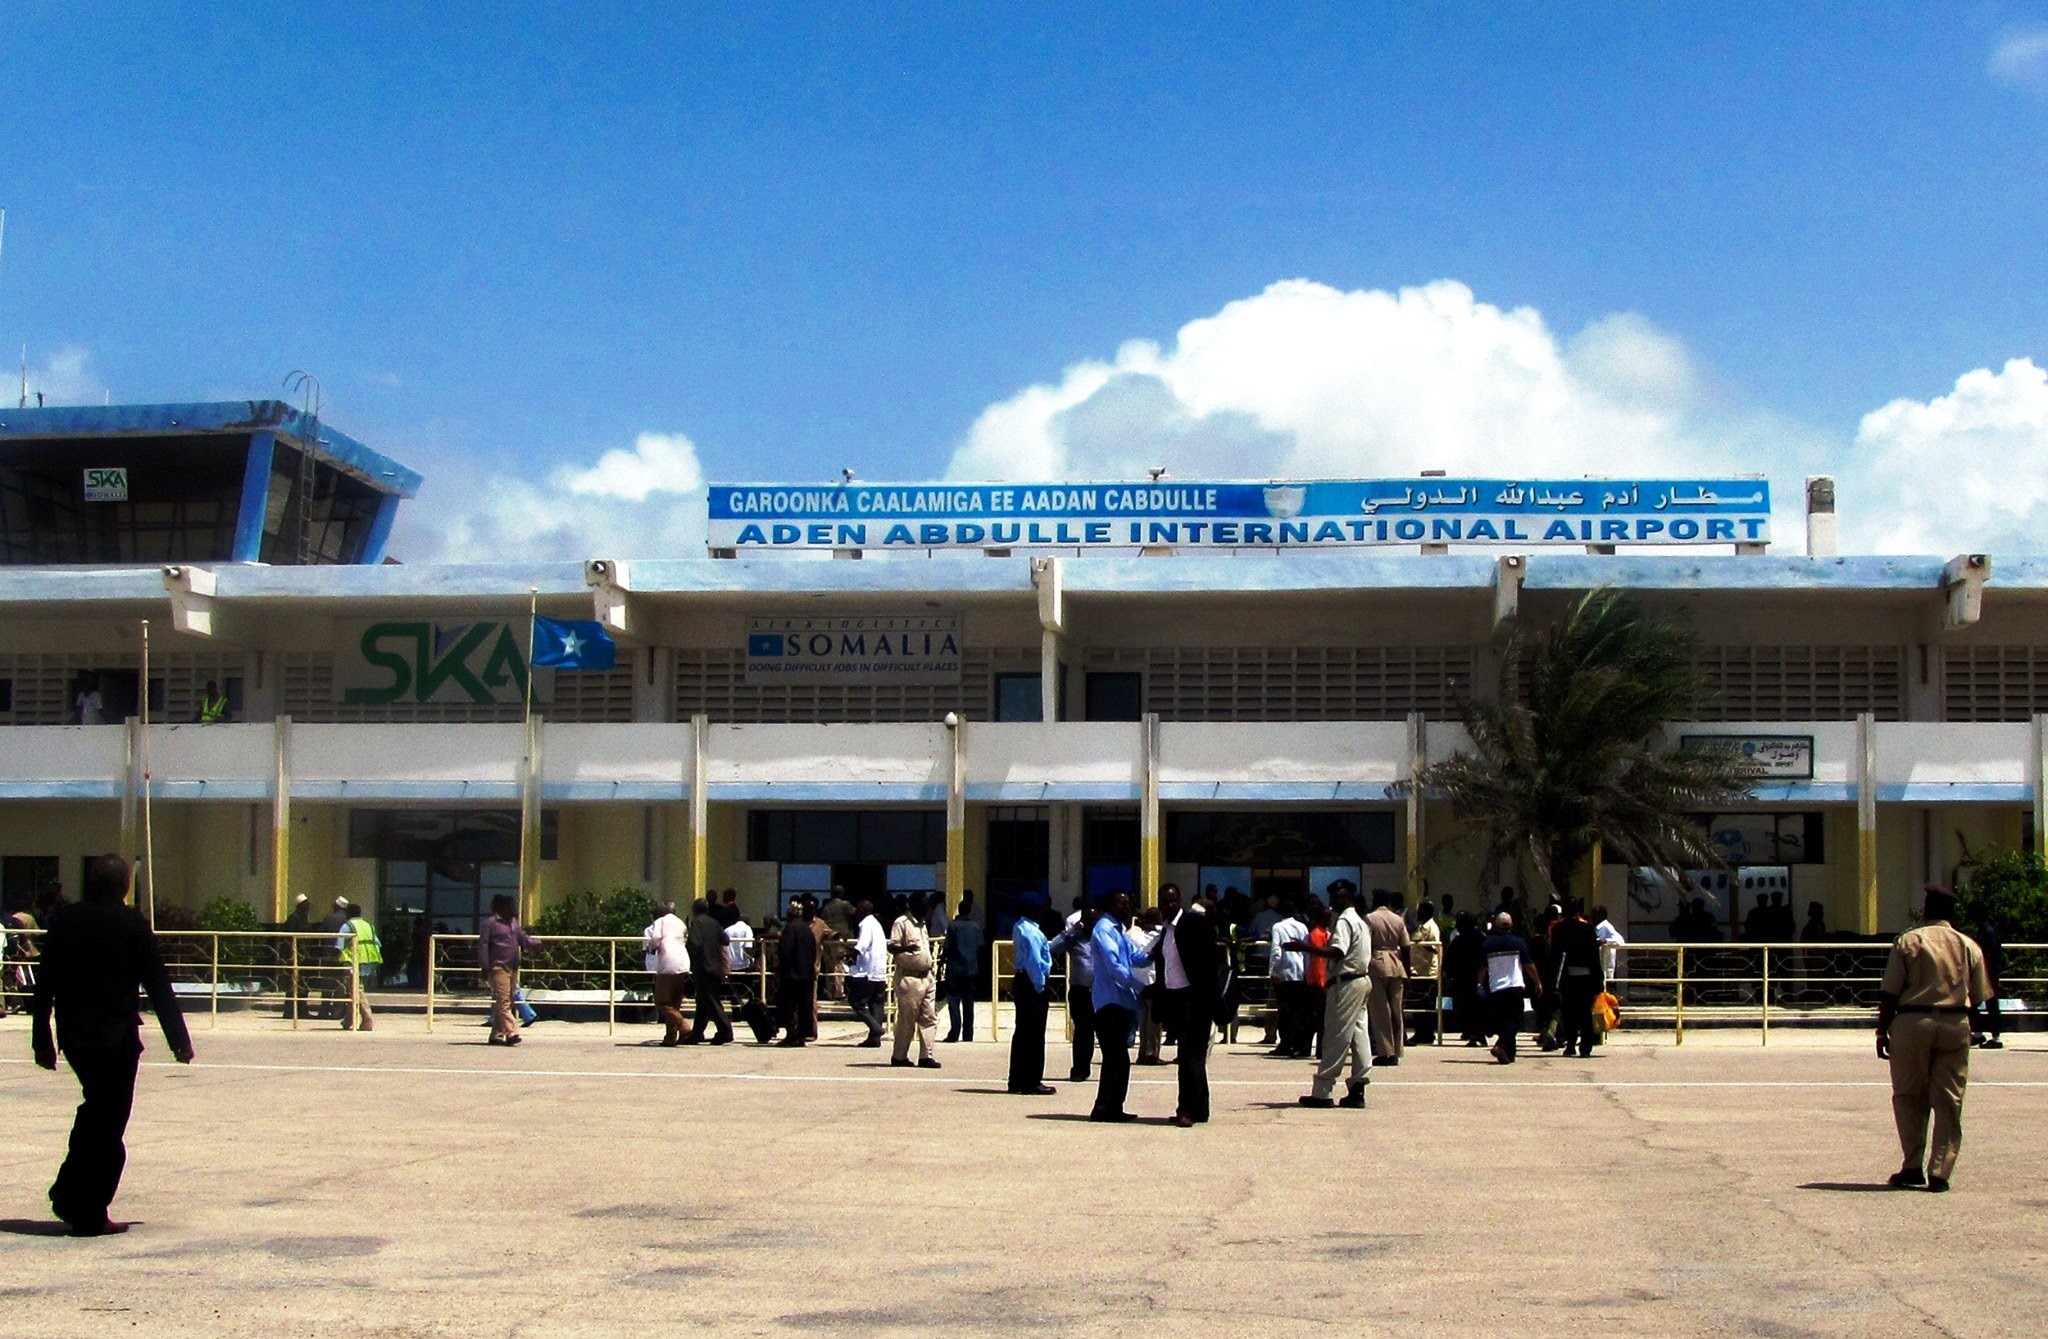 Somalia: One Killed in Mystery Plane Blast